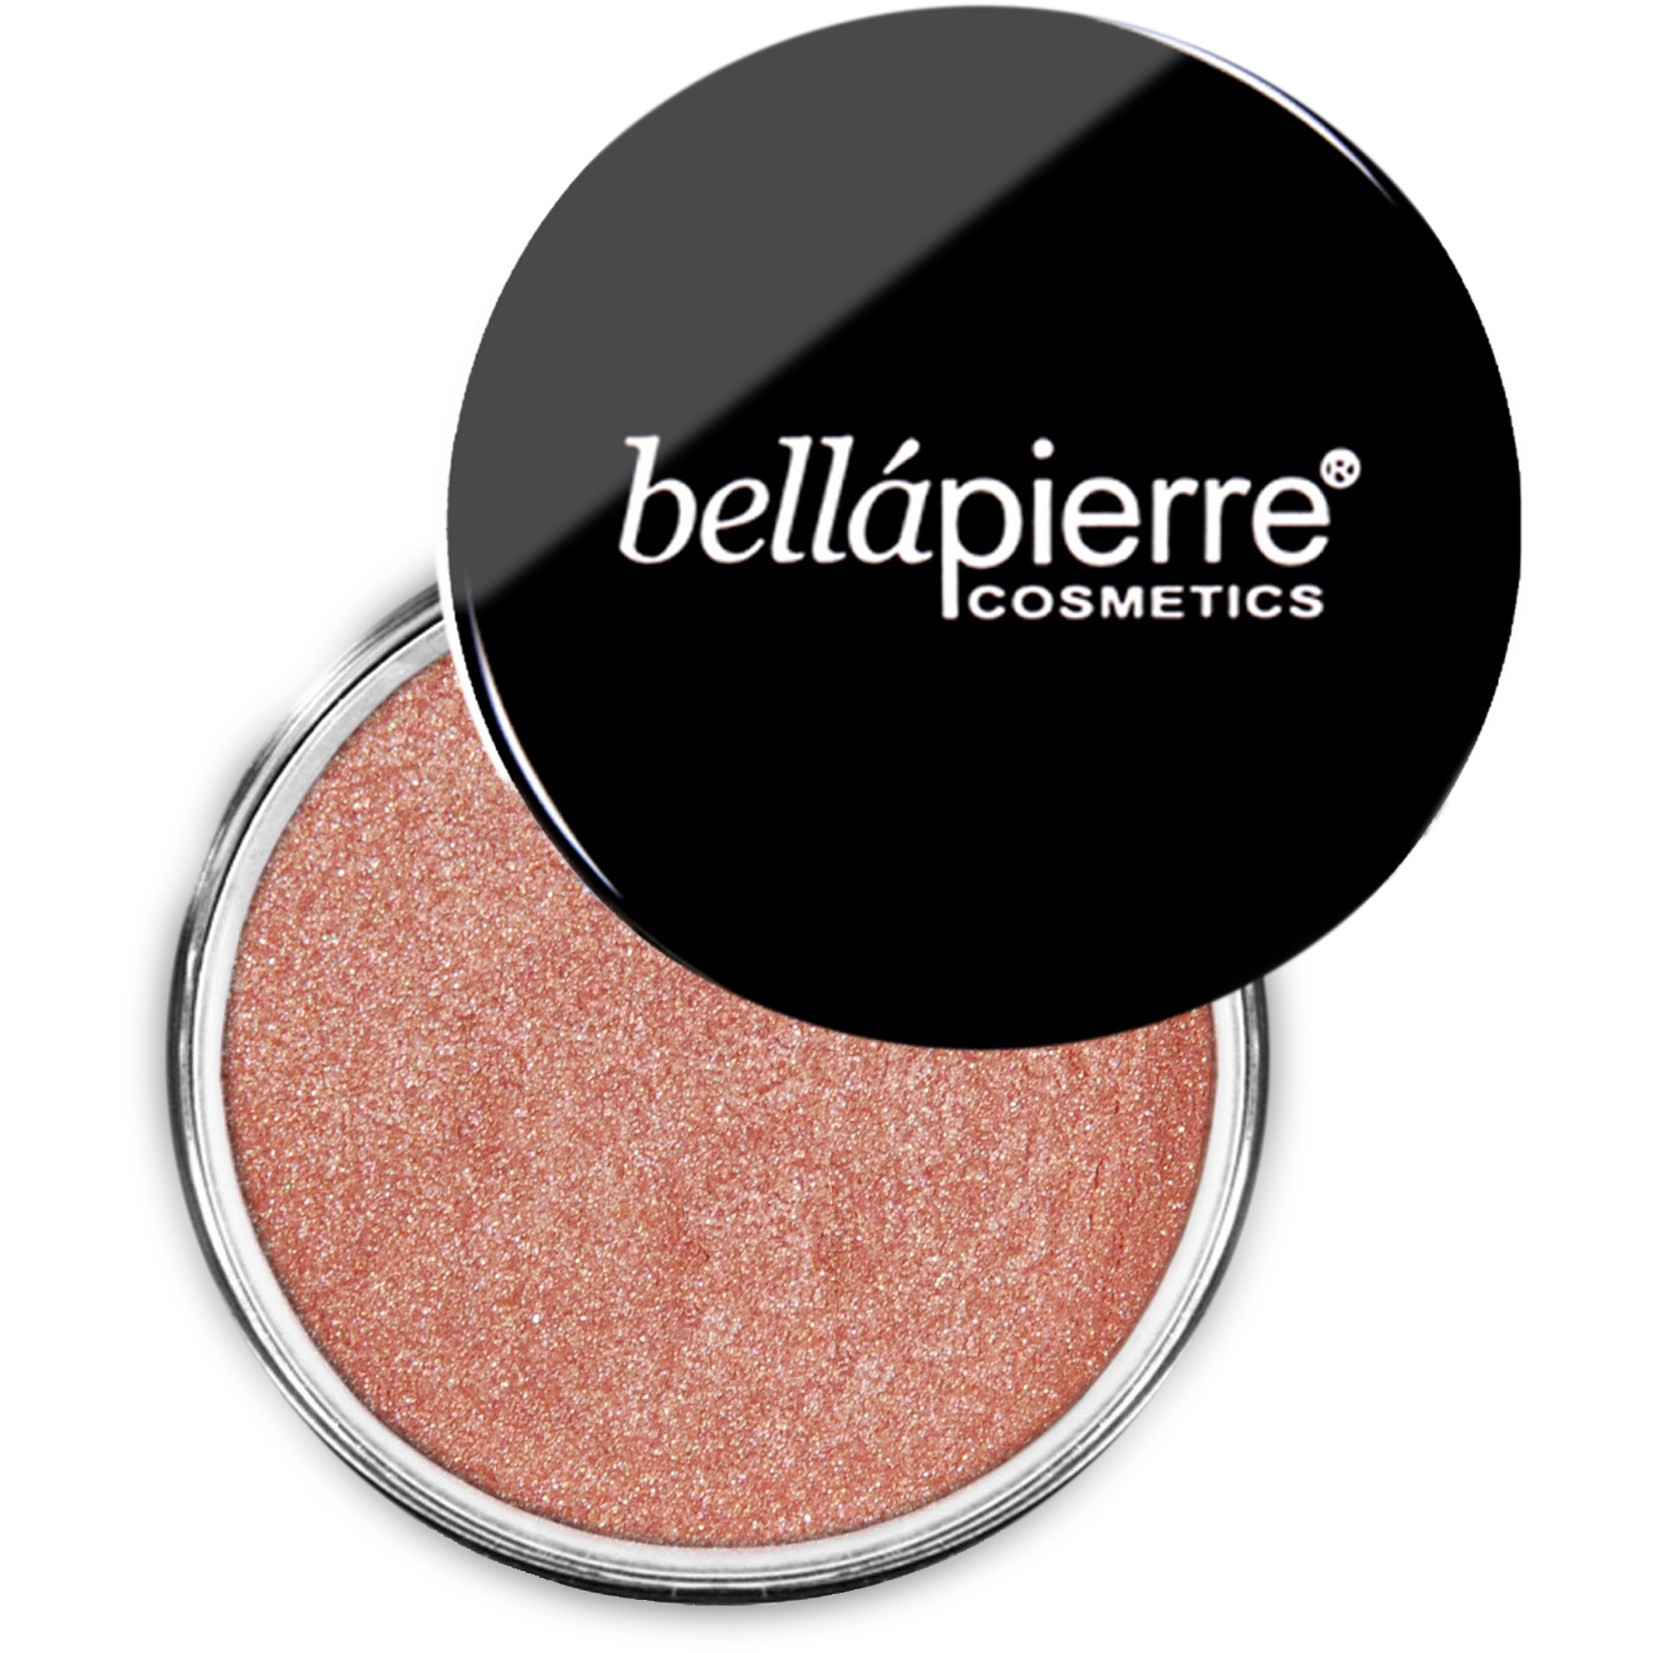 Bellapierre Shimmer Powder - 005 Earth 2.35g